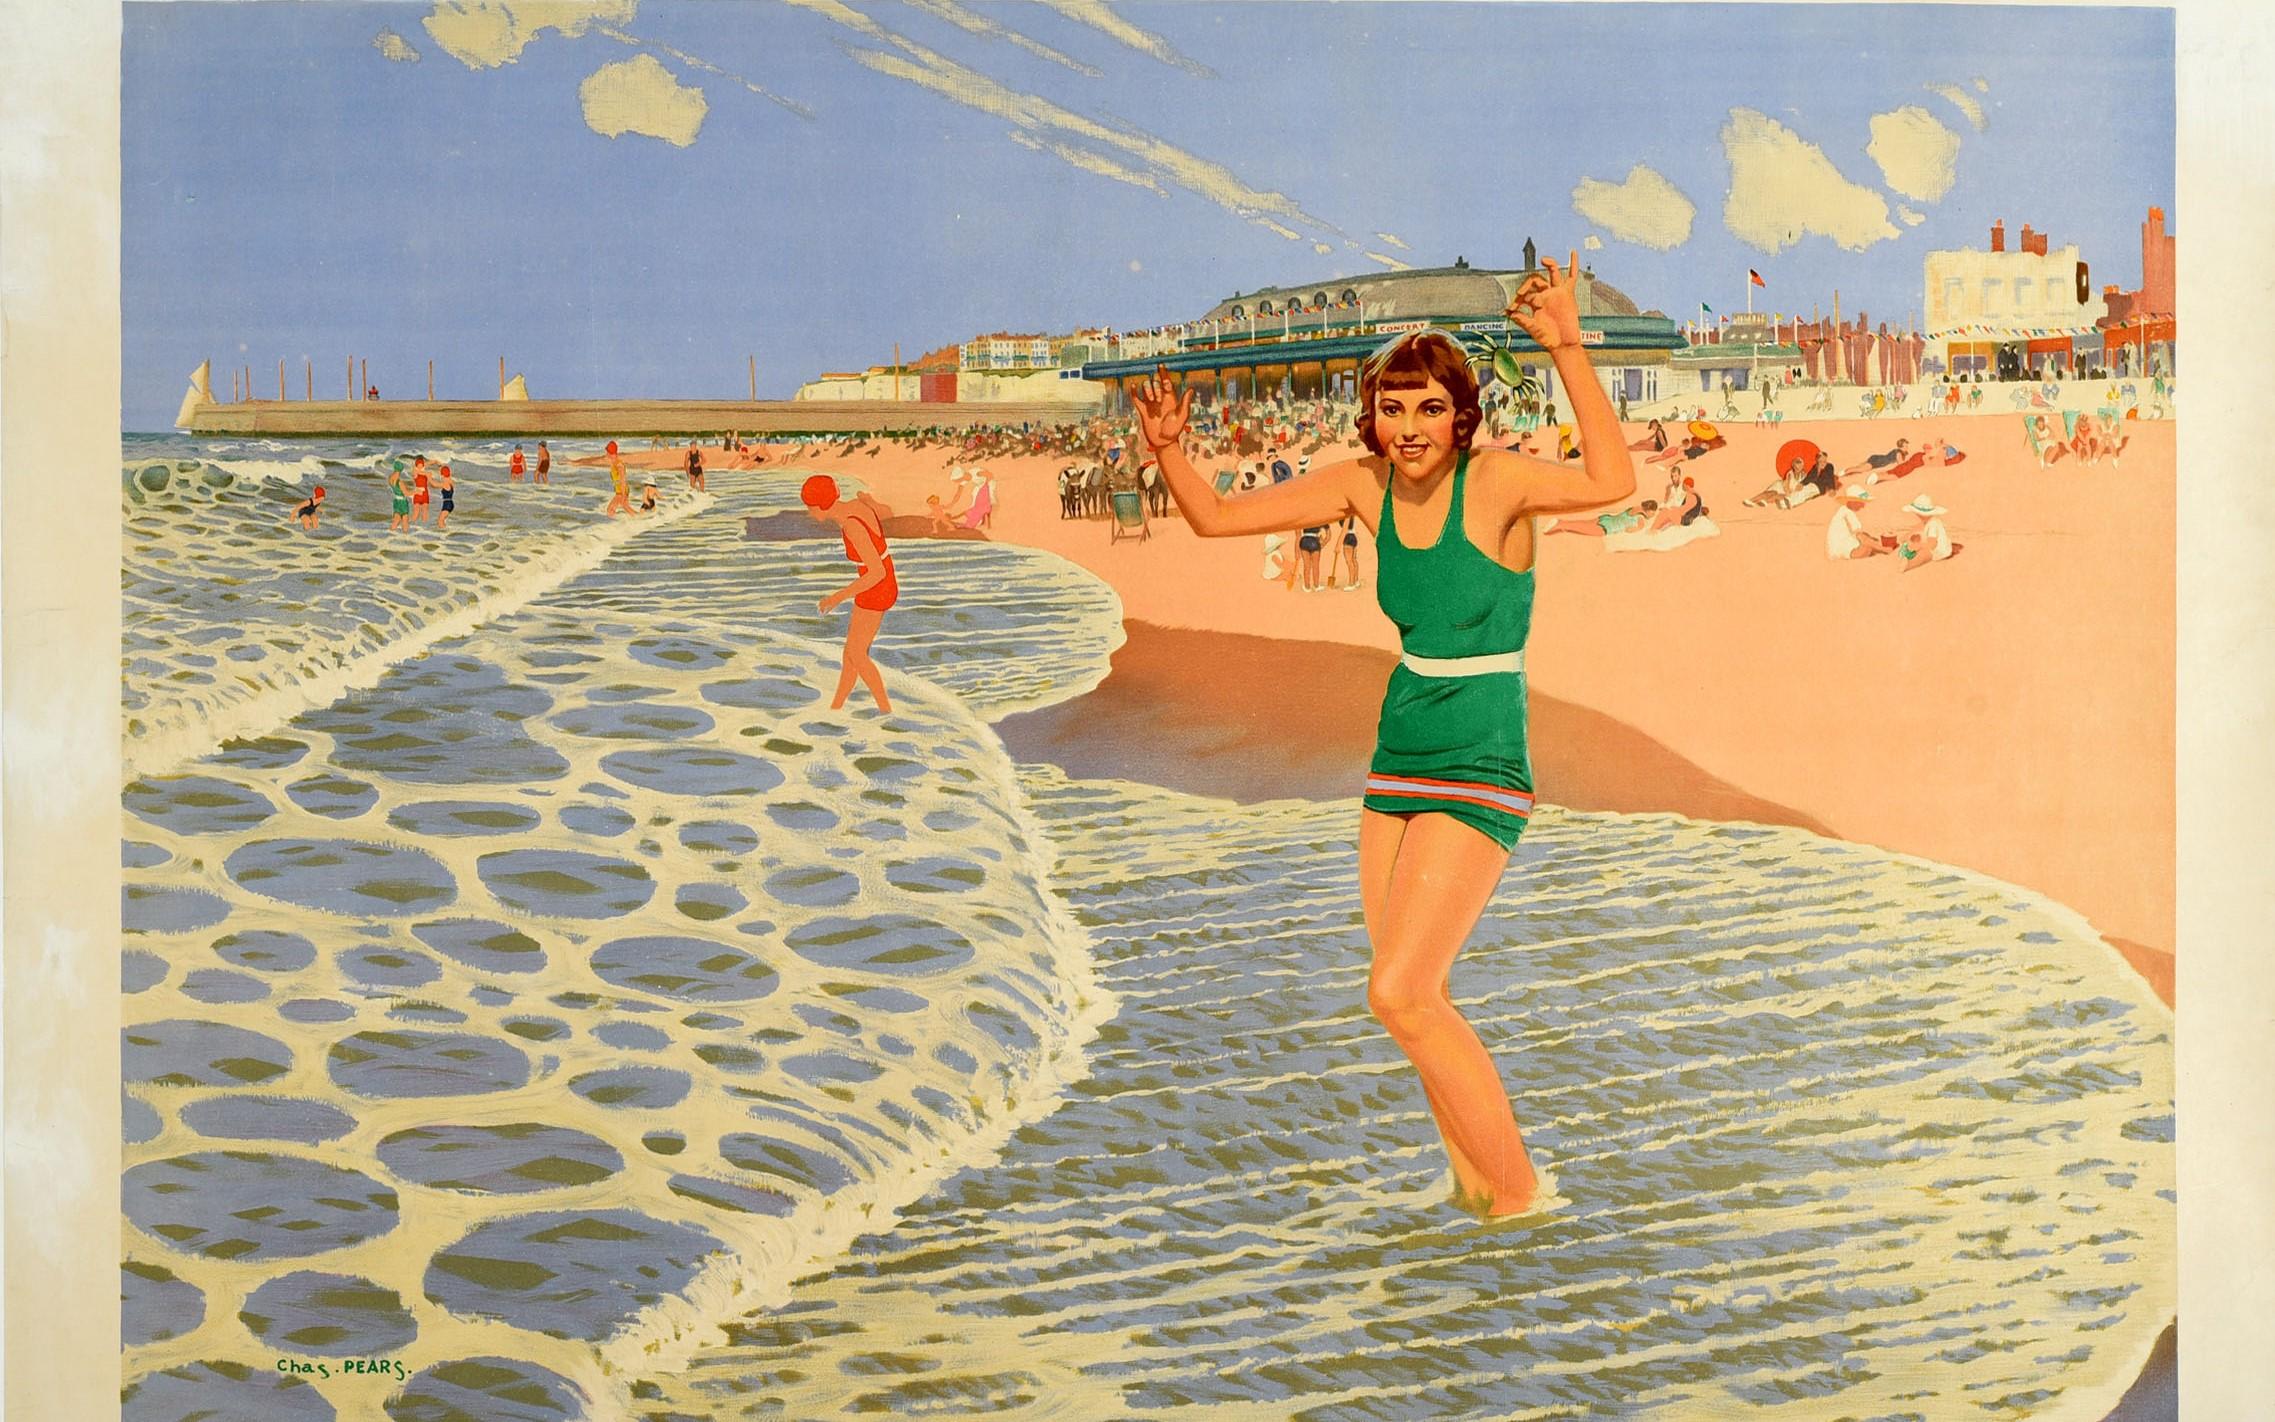 Original Vintage Railway Poster Ramsgate Main Sands Sun Health Fun Coast Travel - Print by Charles Pears